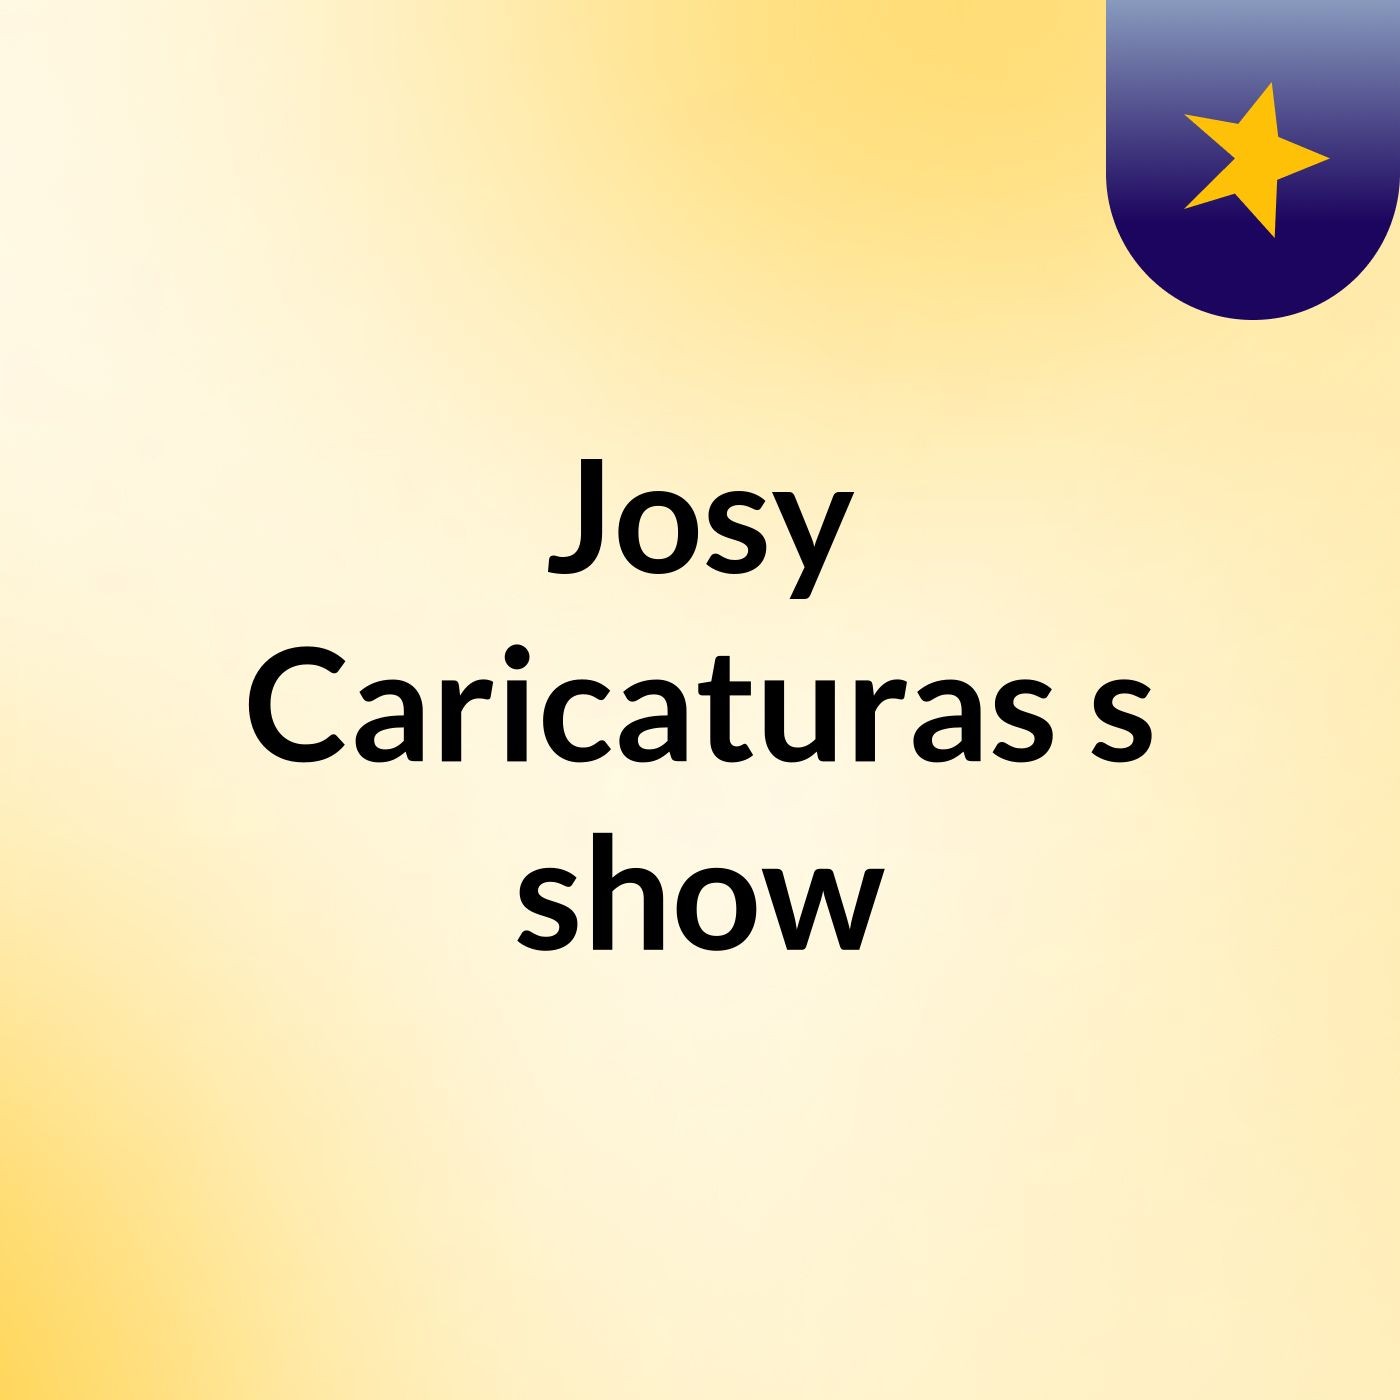 Josy Caricaturas's show